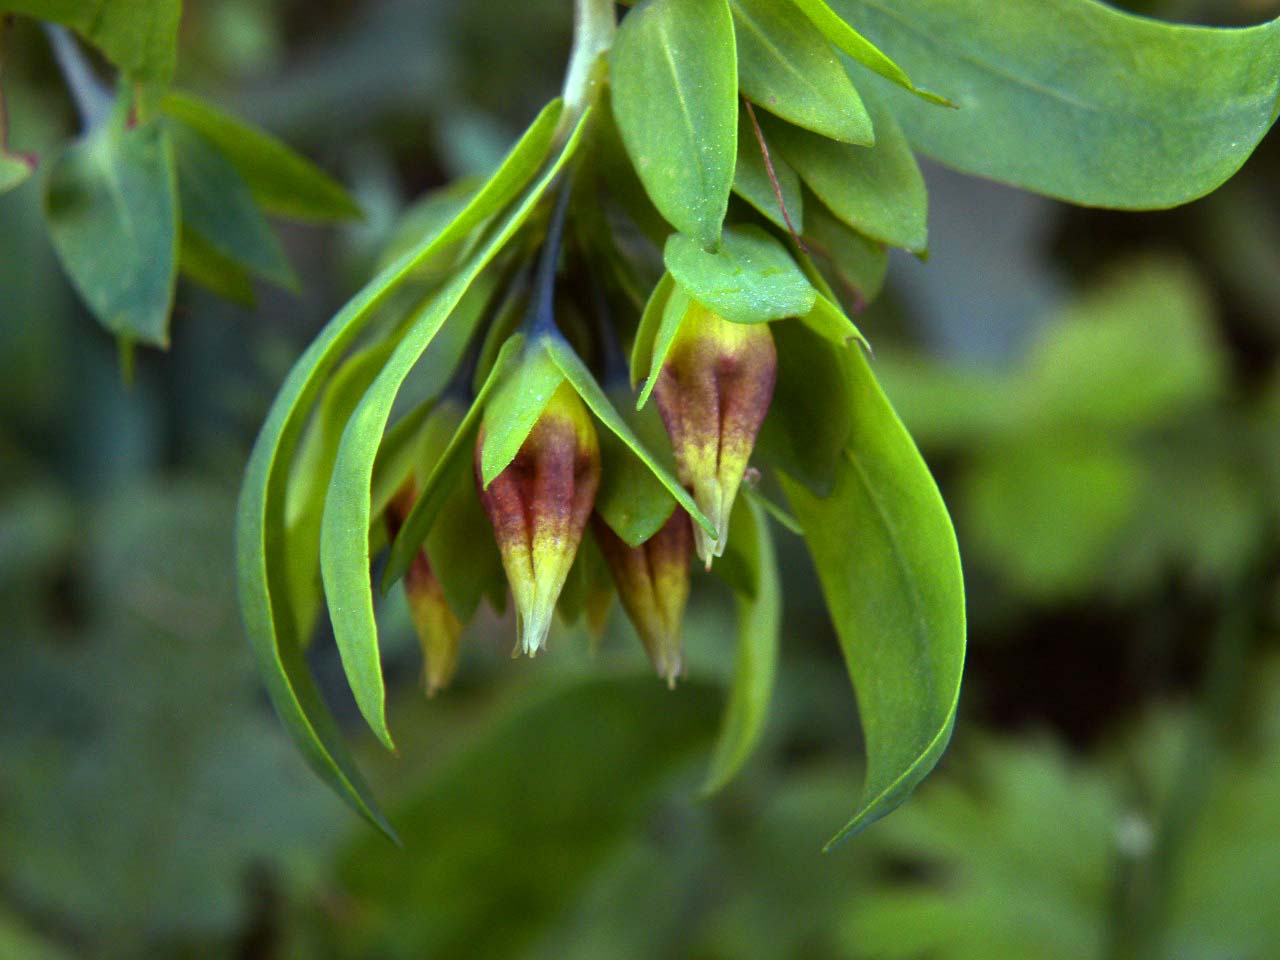 Cerinthe minor subsp. auriculata / Erba vajola auricolata